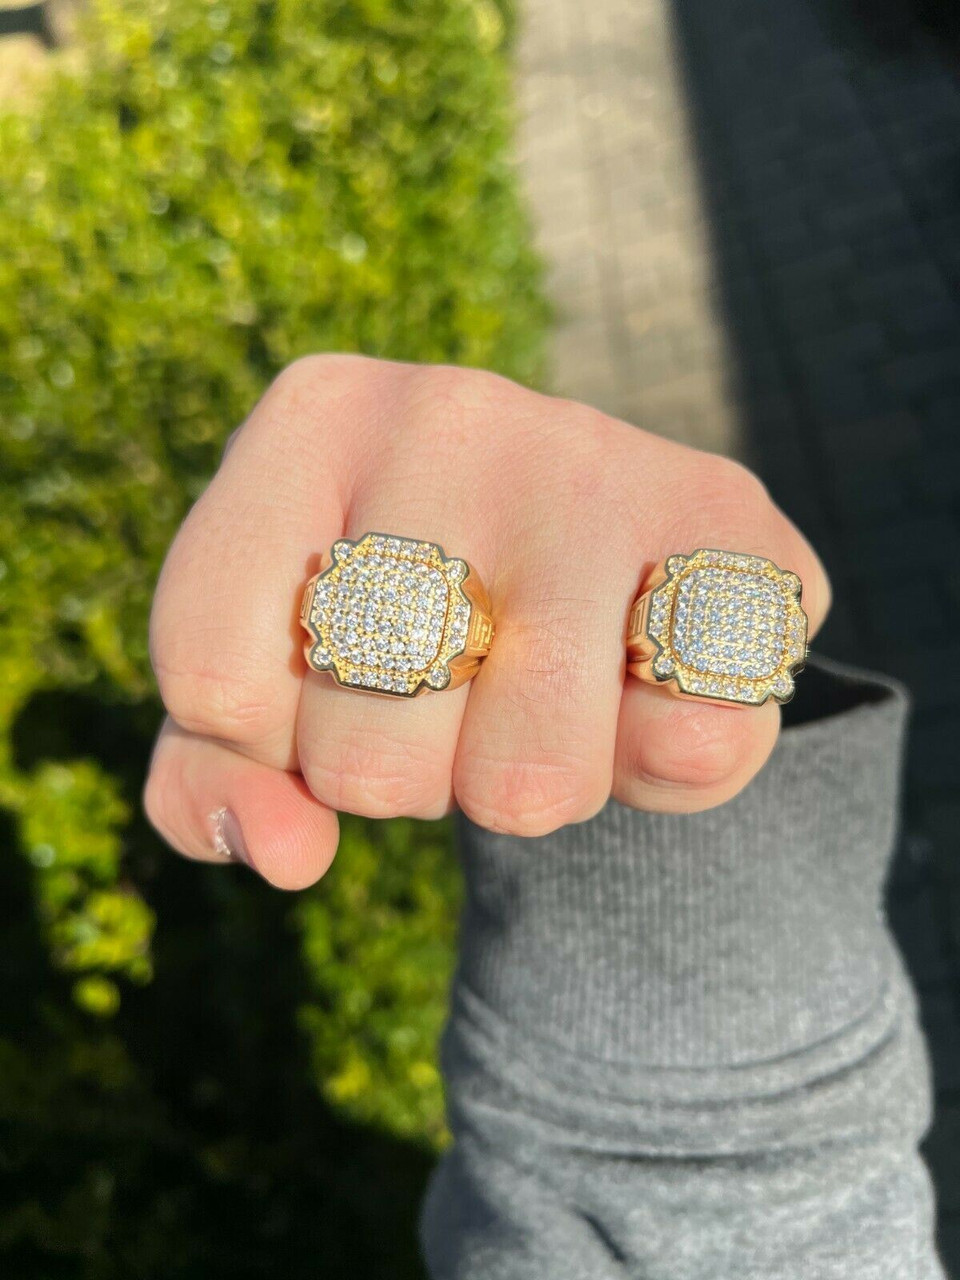 Buy quality Mesmerising 18kt real diamond finger rings in rose gold in Pune